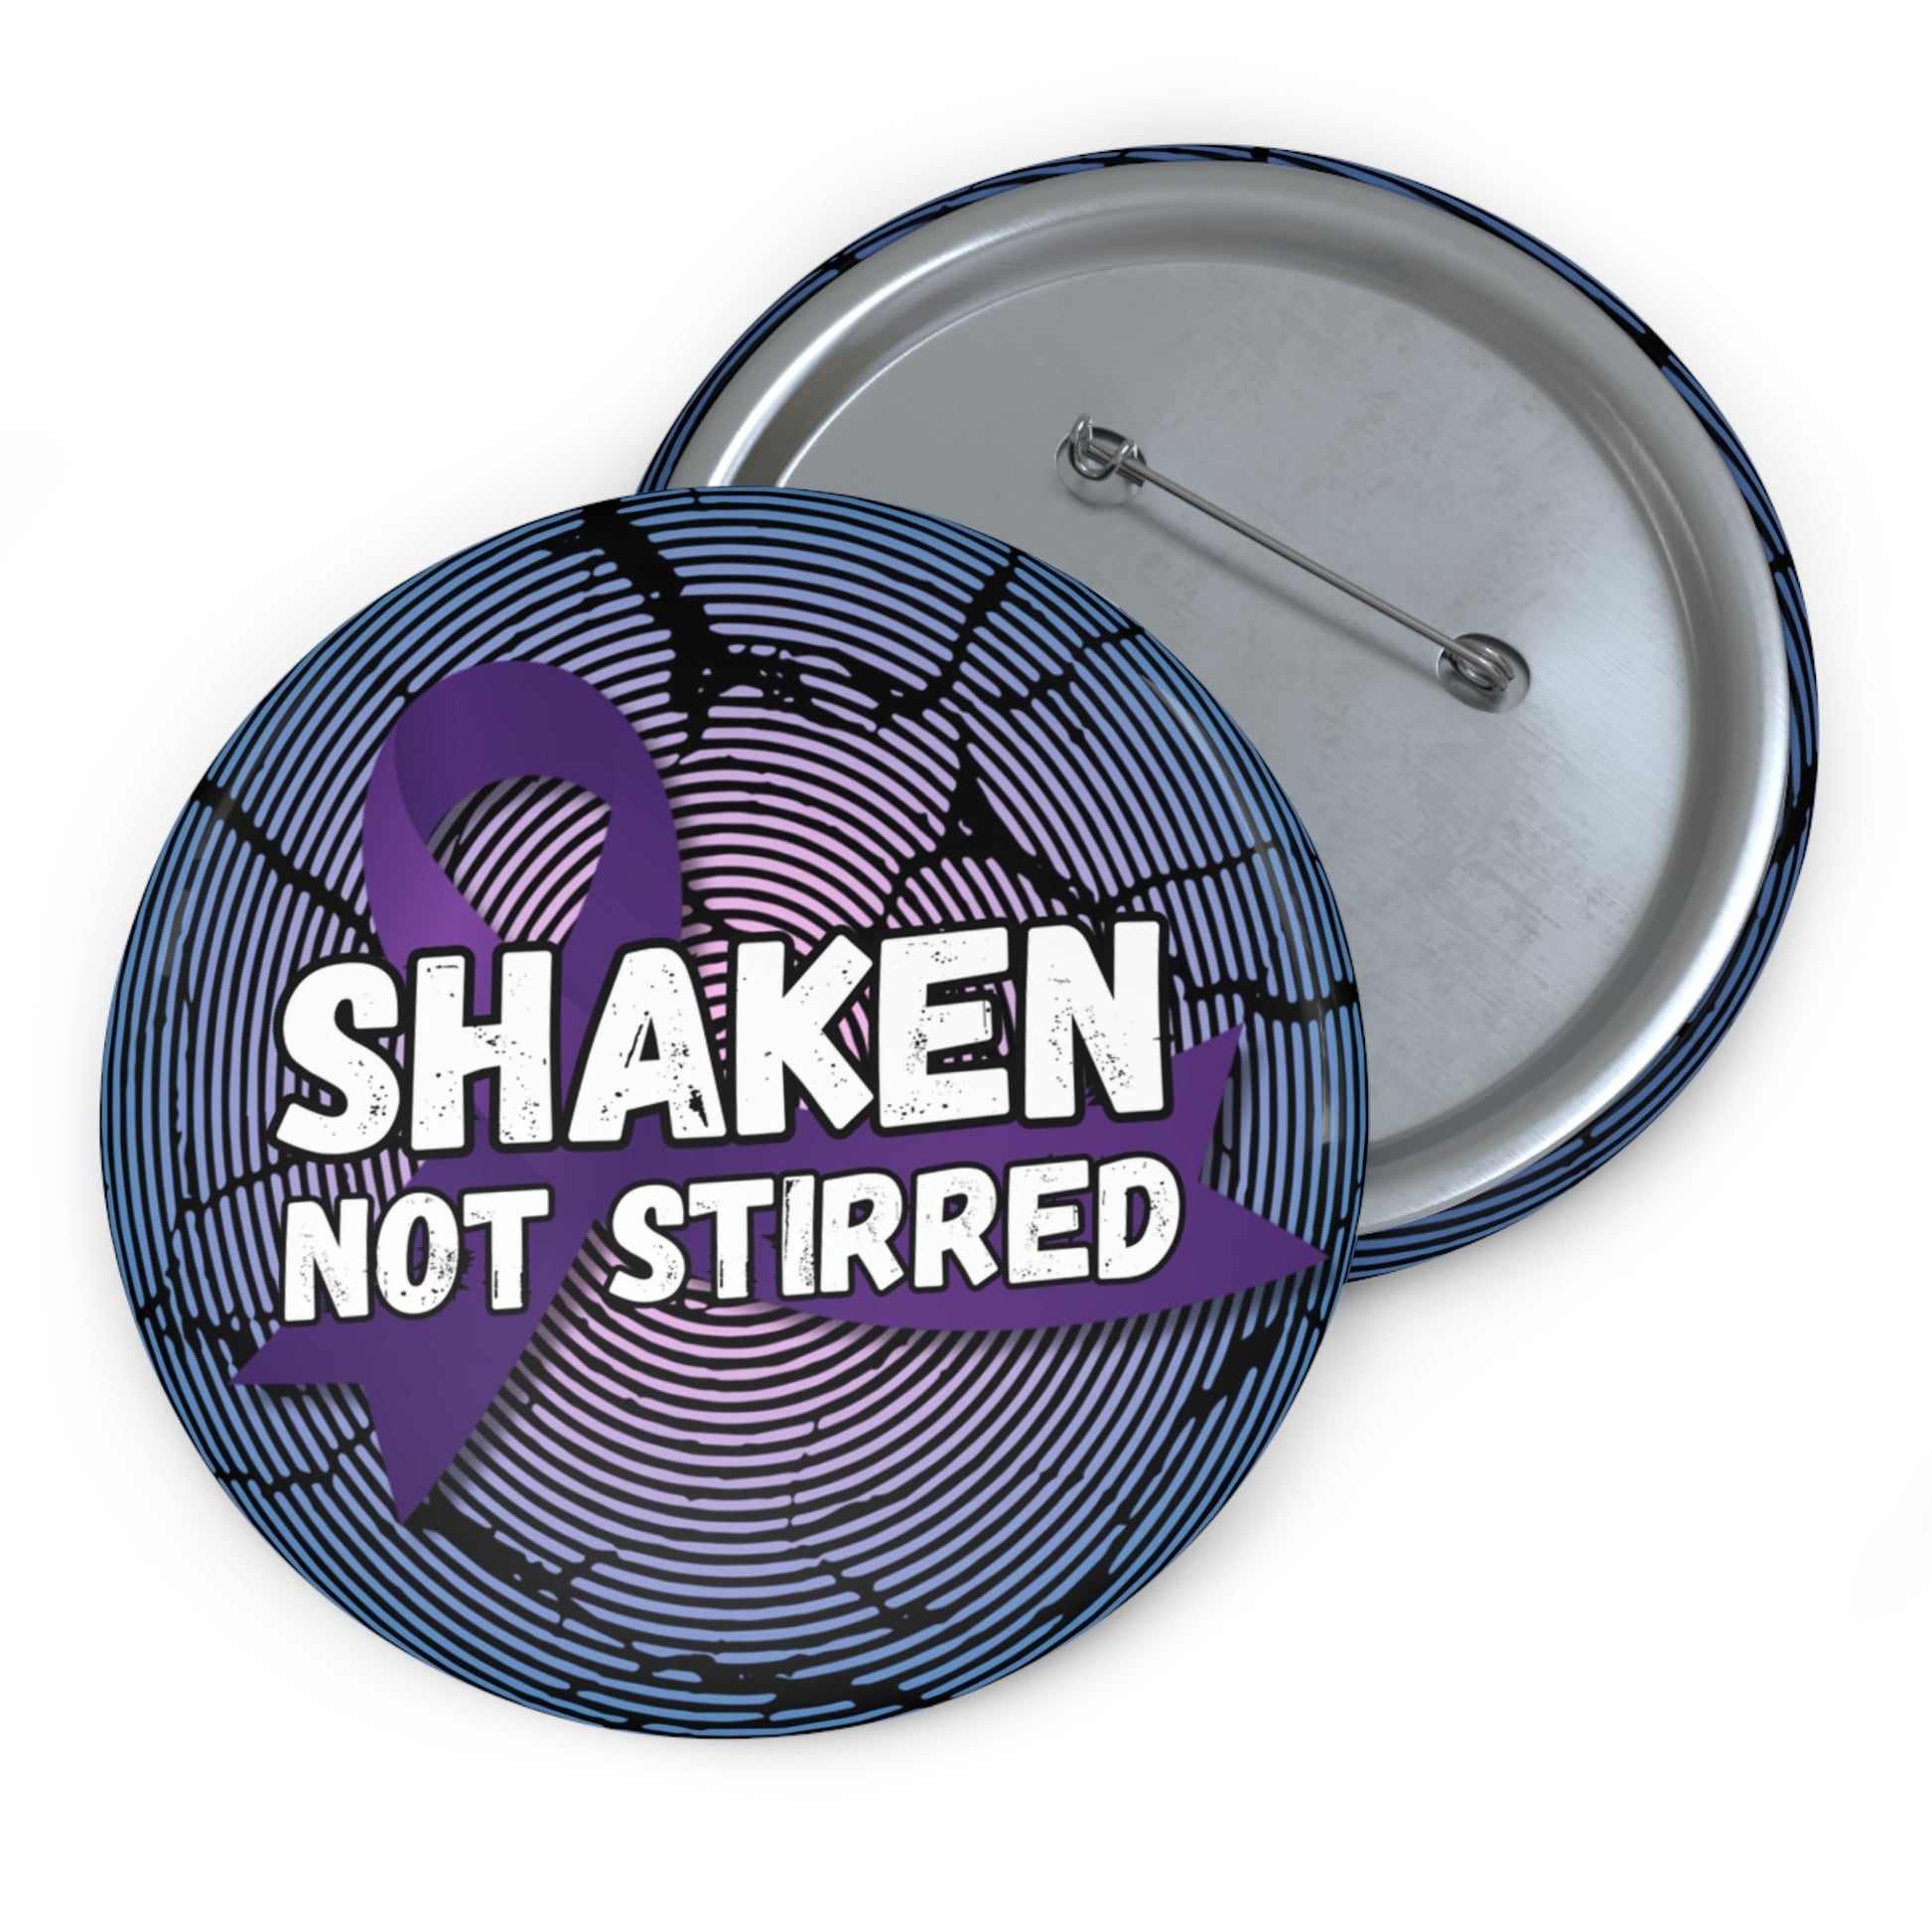 Shaken Epilepsy Awareness Pin Buttons - Accessories - Epileptic Al’s Shop